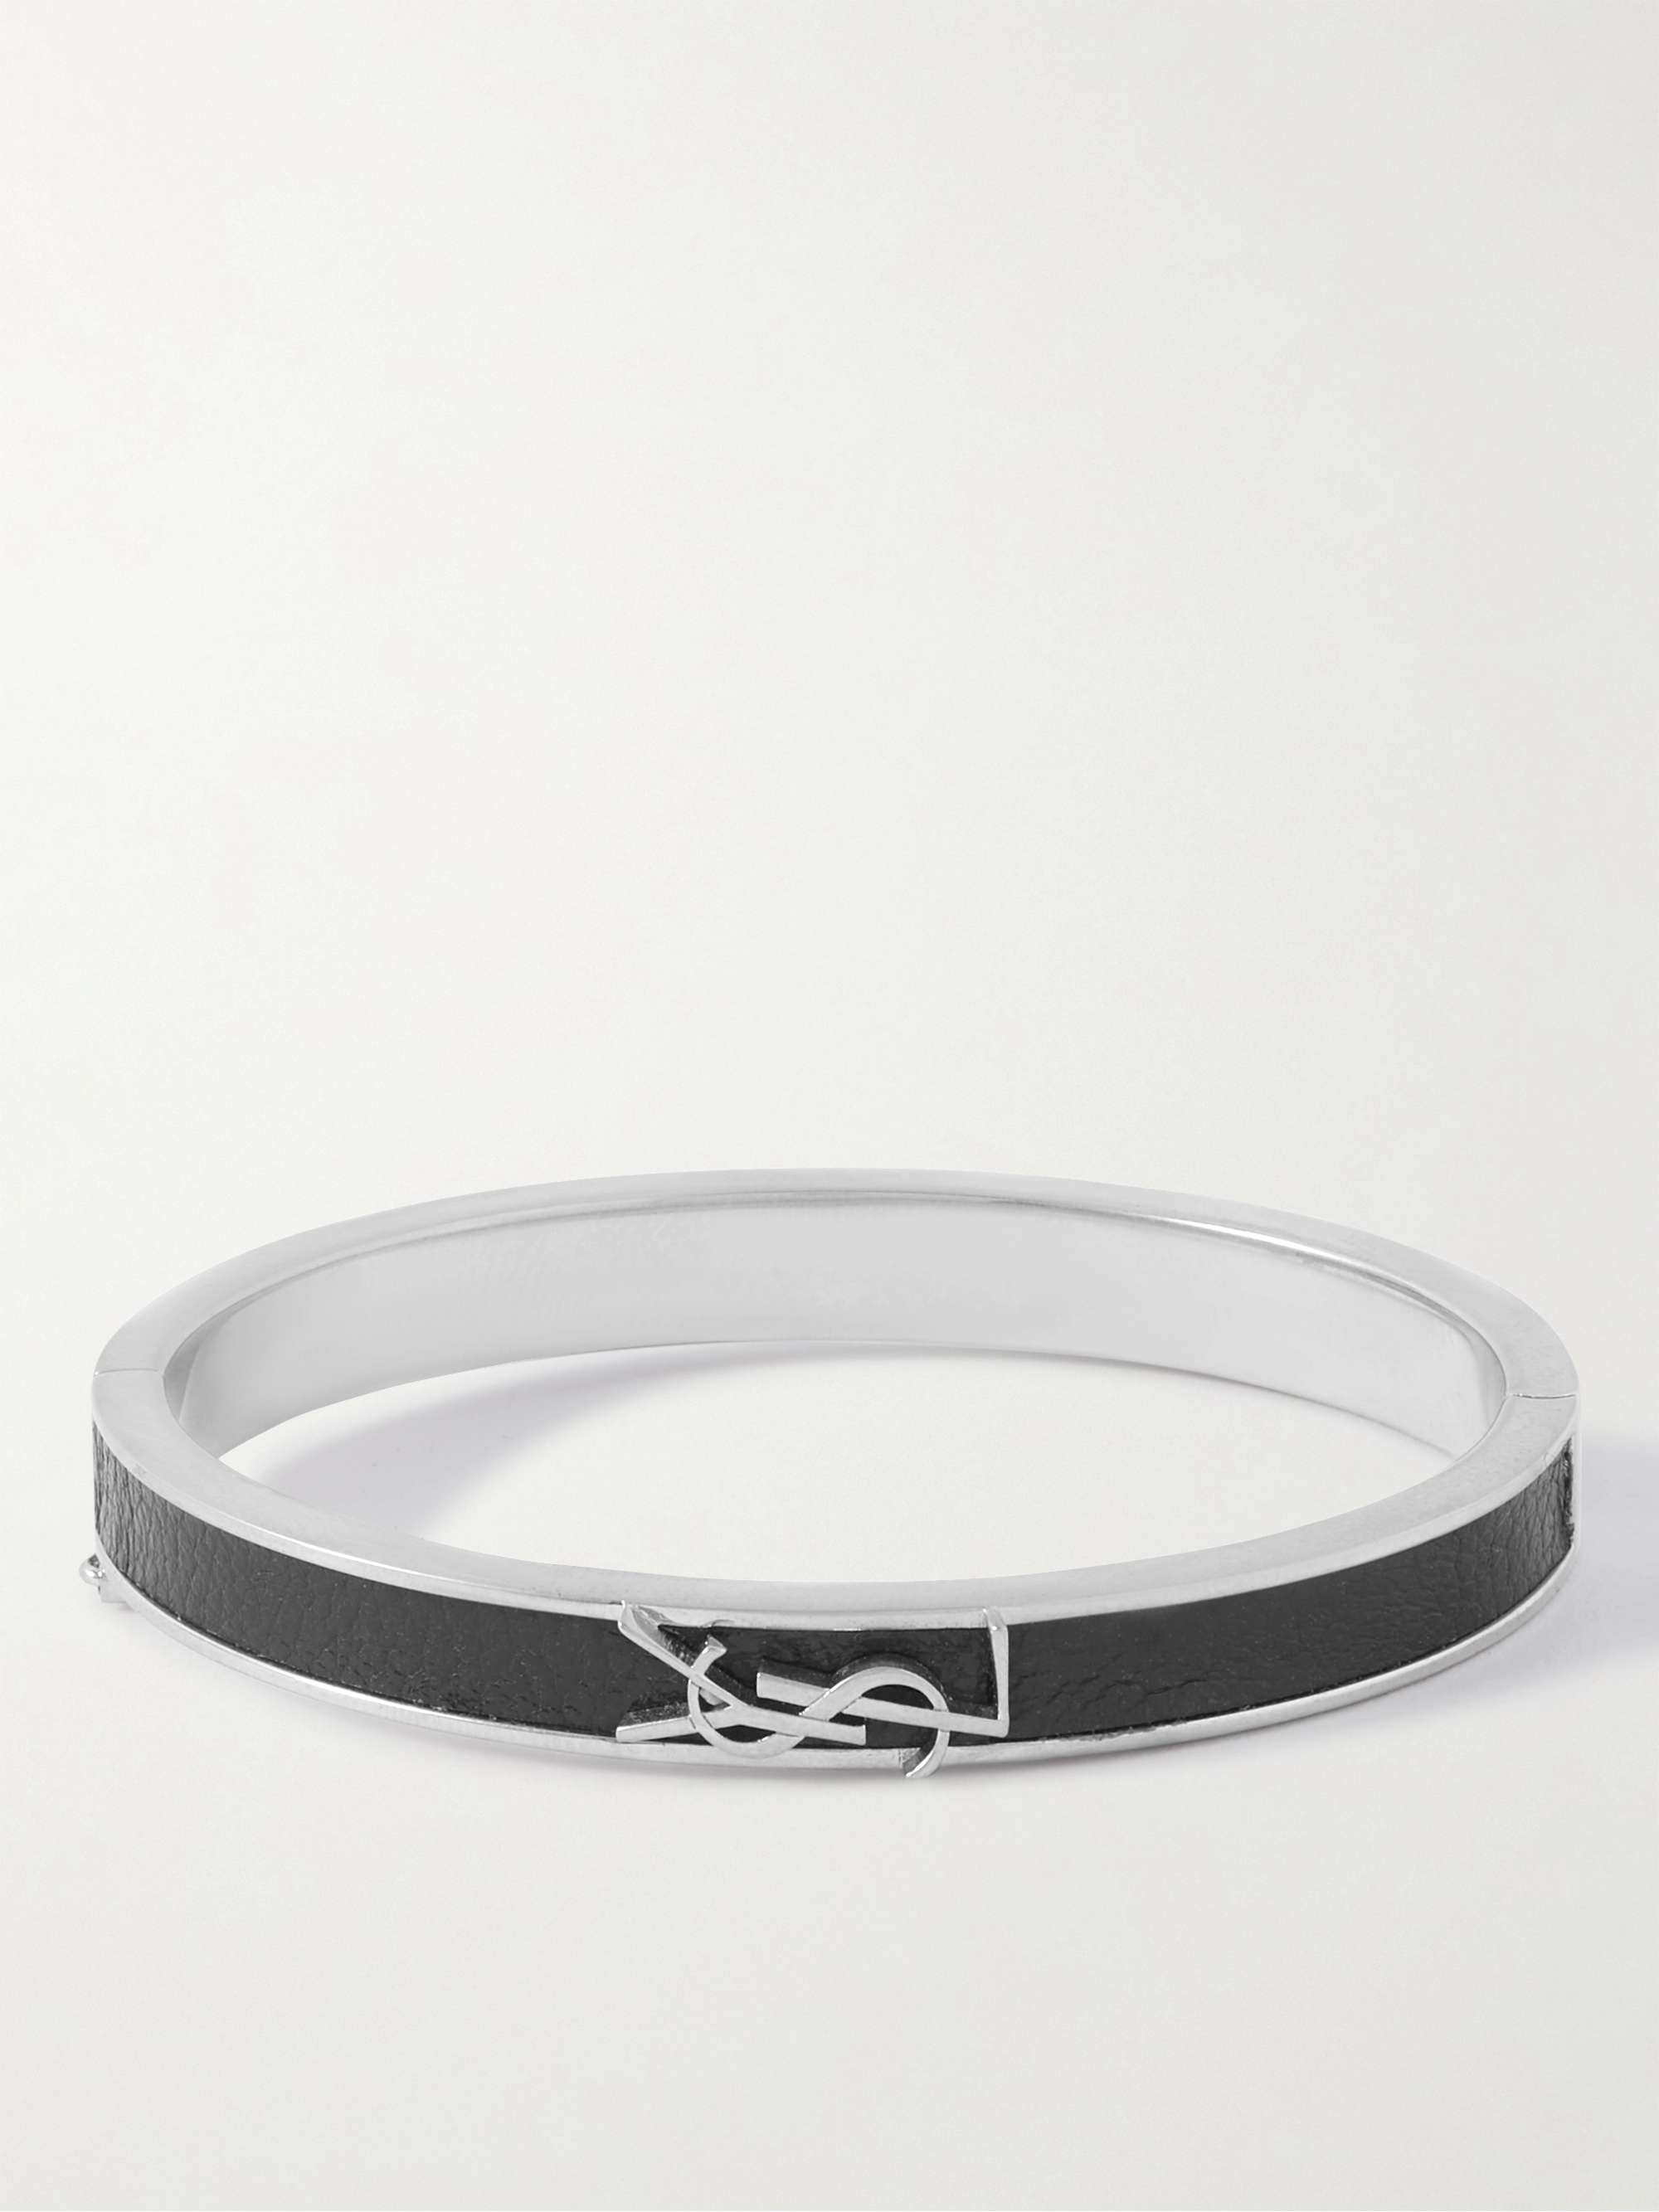 SAINT LAURENT Silver-Tone and Leather Bracelet for Men | MR PORTER